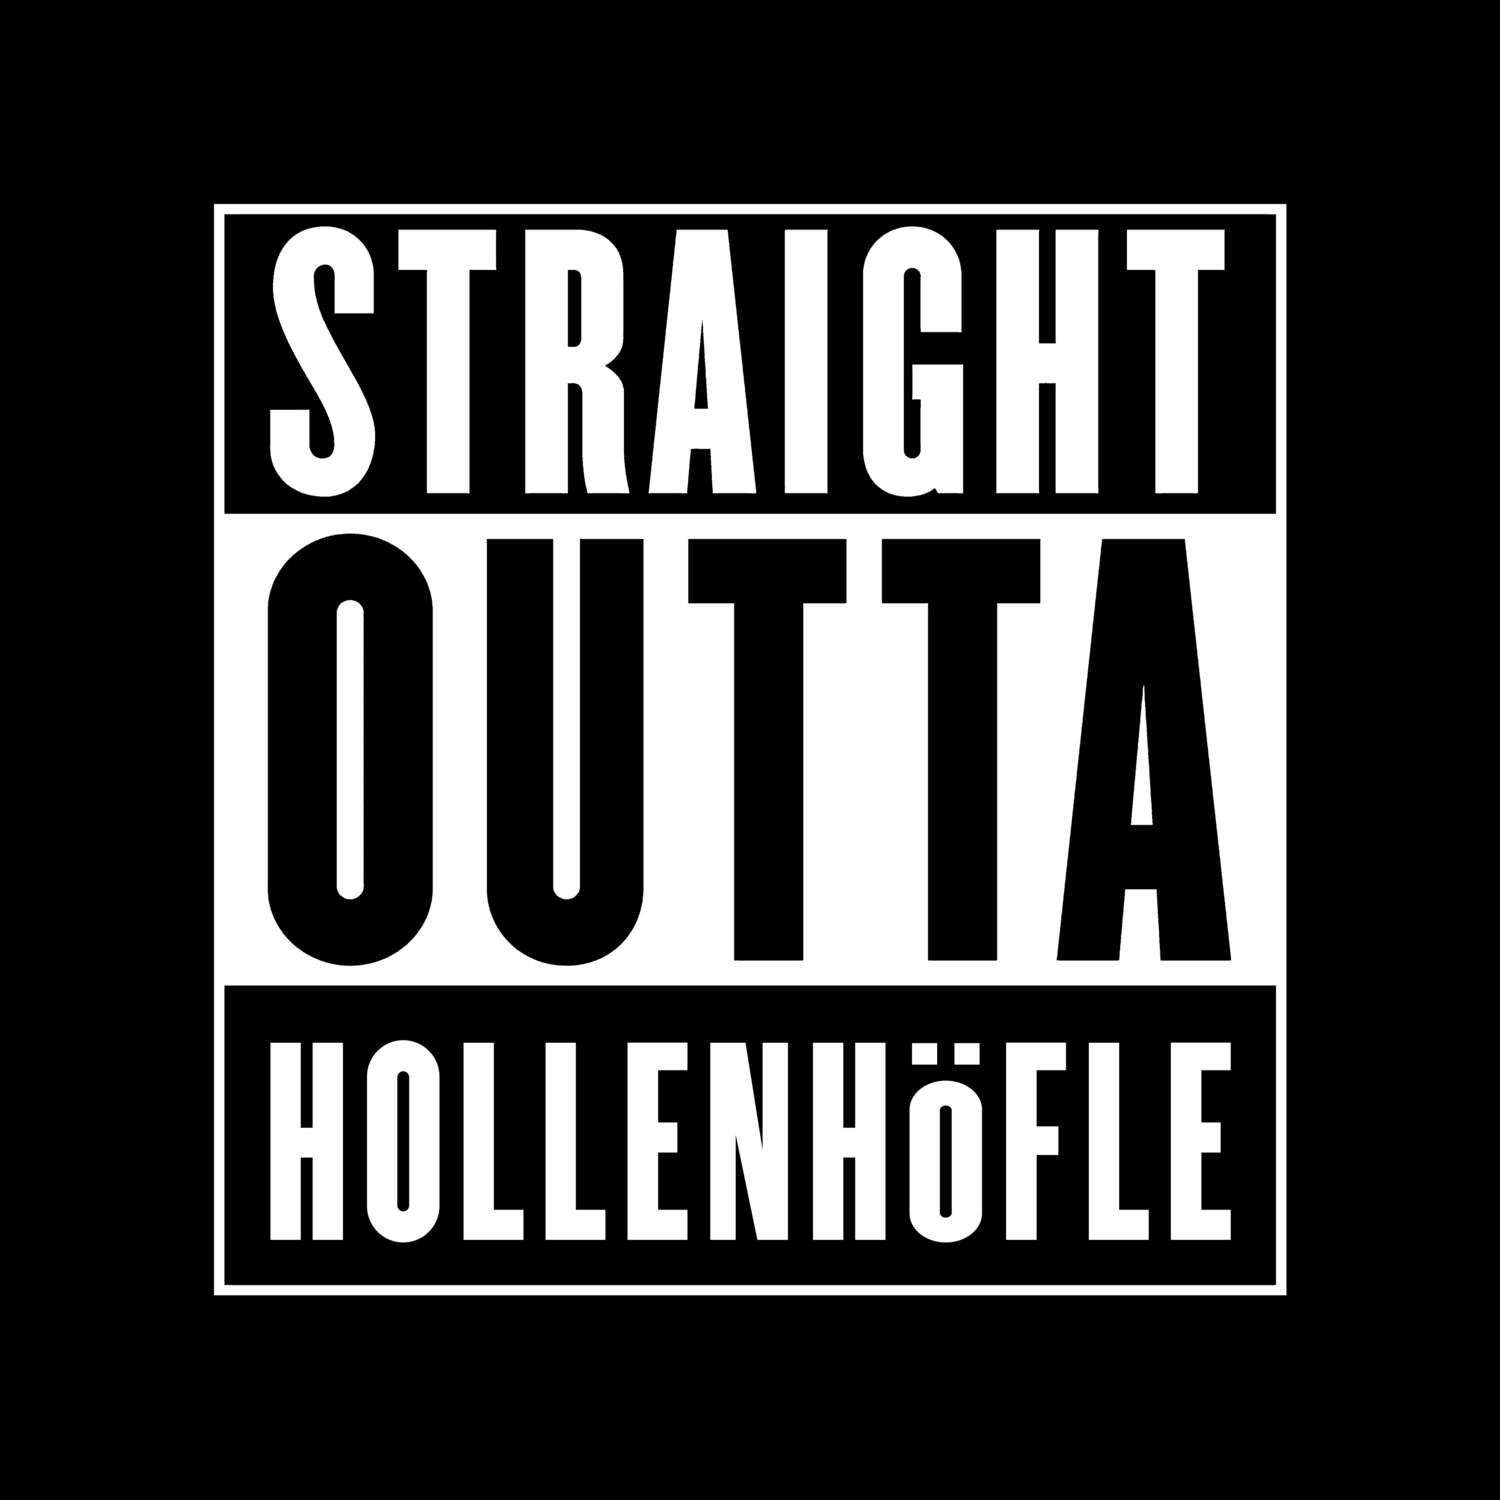 Hollenhöfle T-Shirt »Straight Outta«